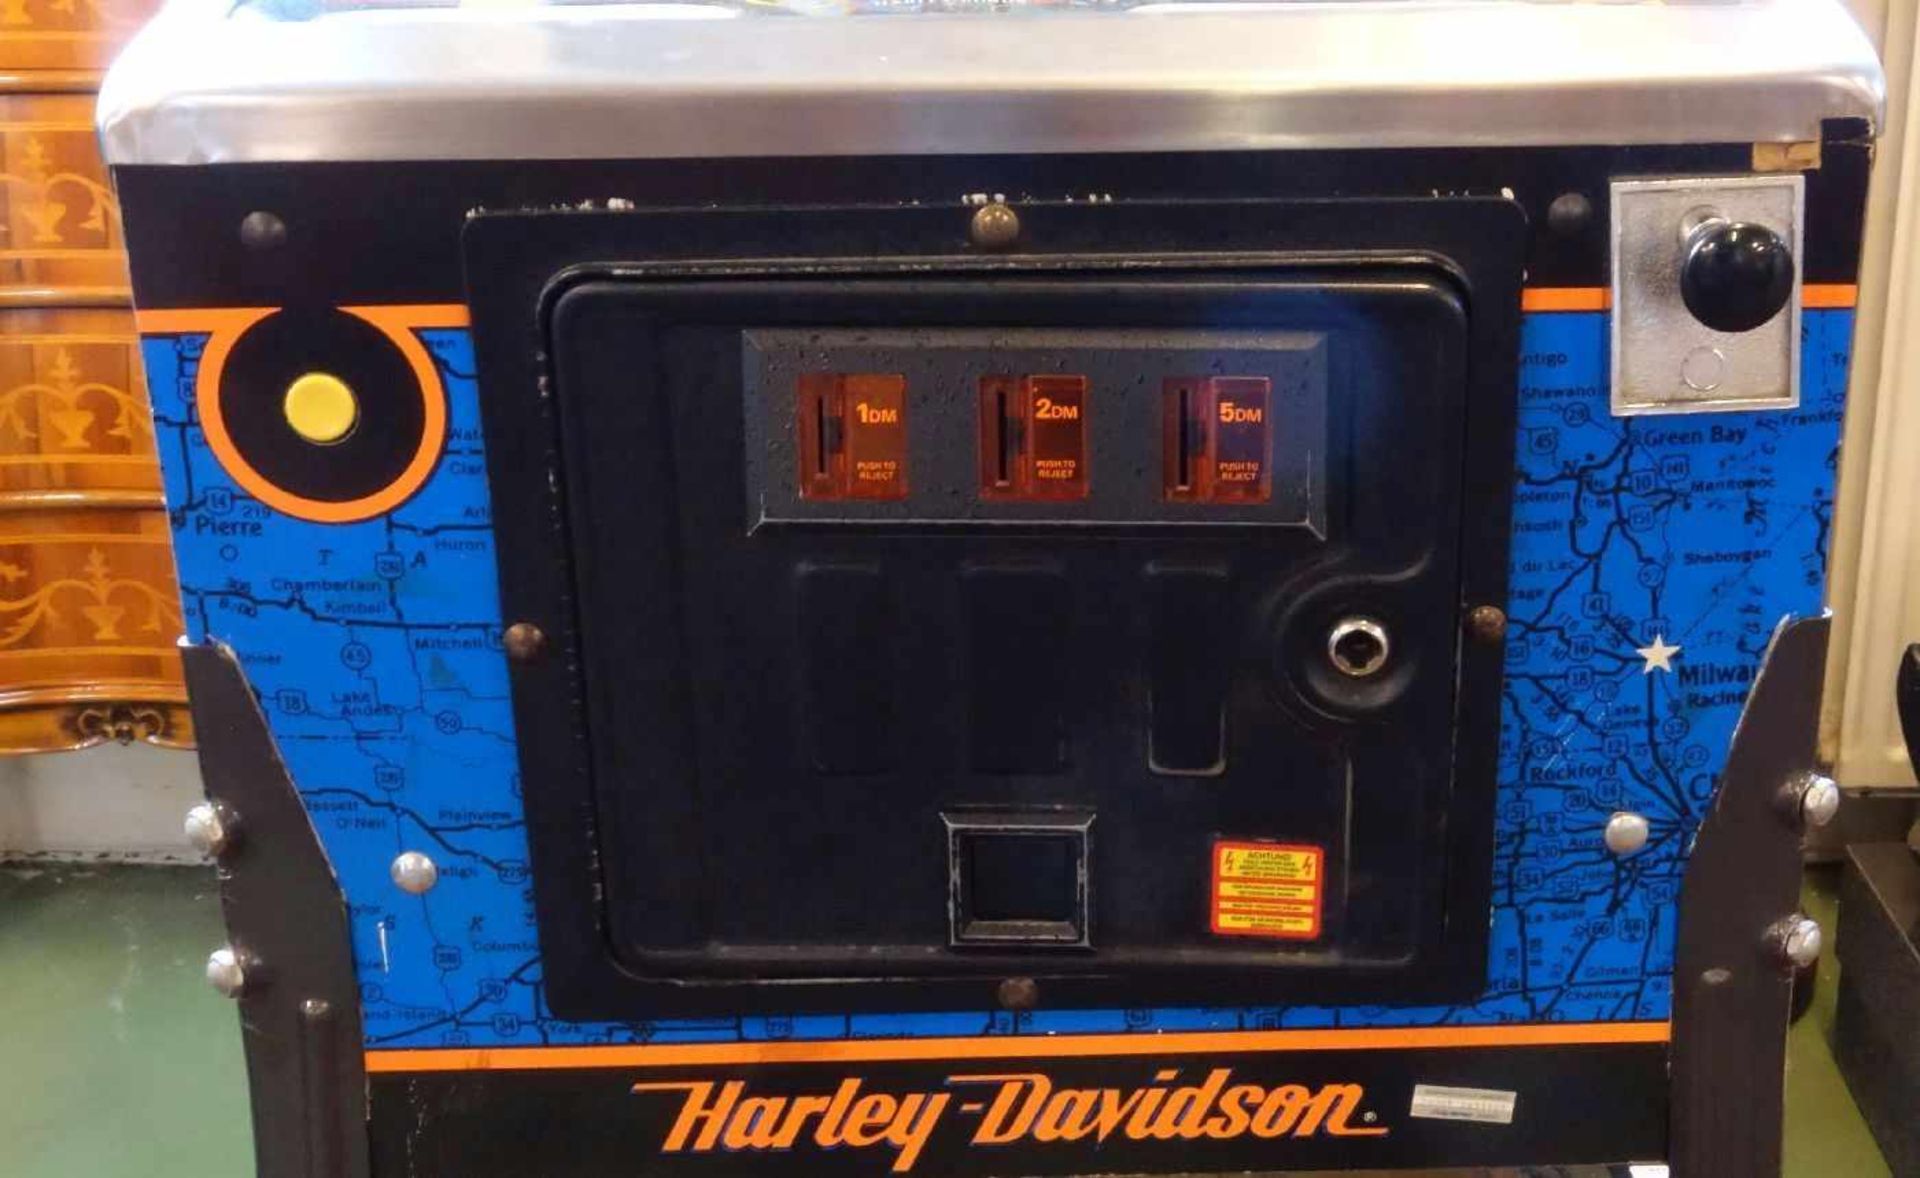 FLIPPERAUTOMAT / FLIPPER BALLY "HARLEY DAVIDSON" / pinball, aus dem Jahre 1991, Manufaktur Bally. - Image 9 of 14